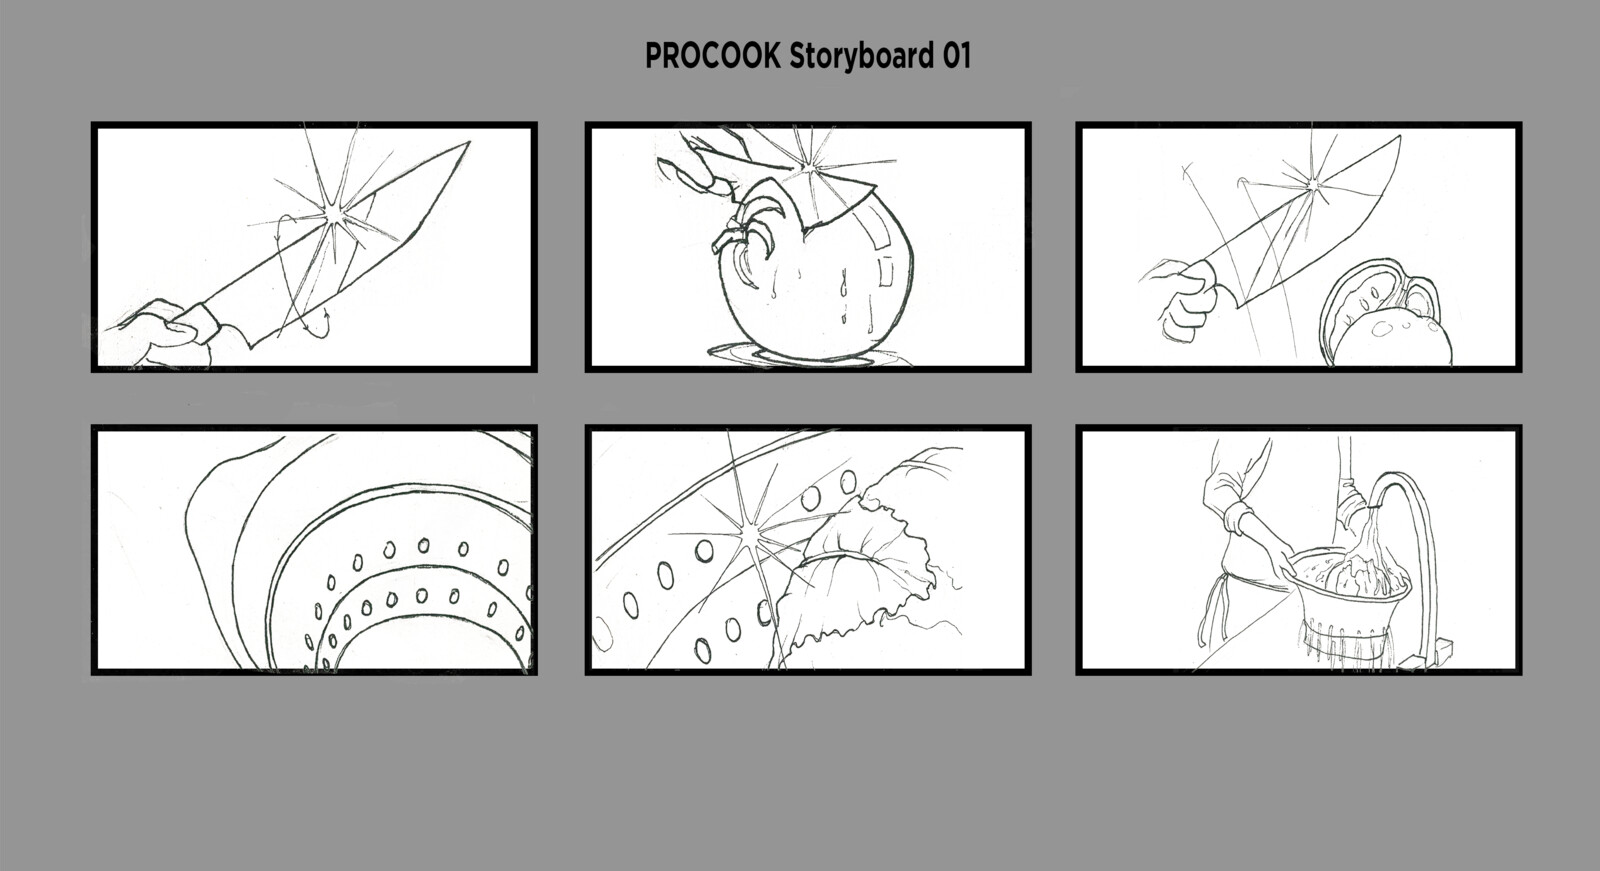 Procook ad Storyboard 